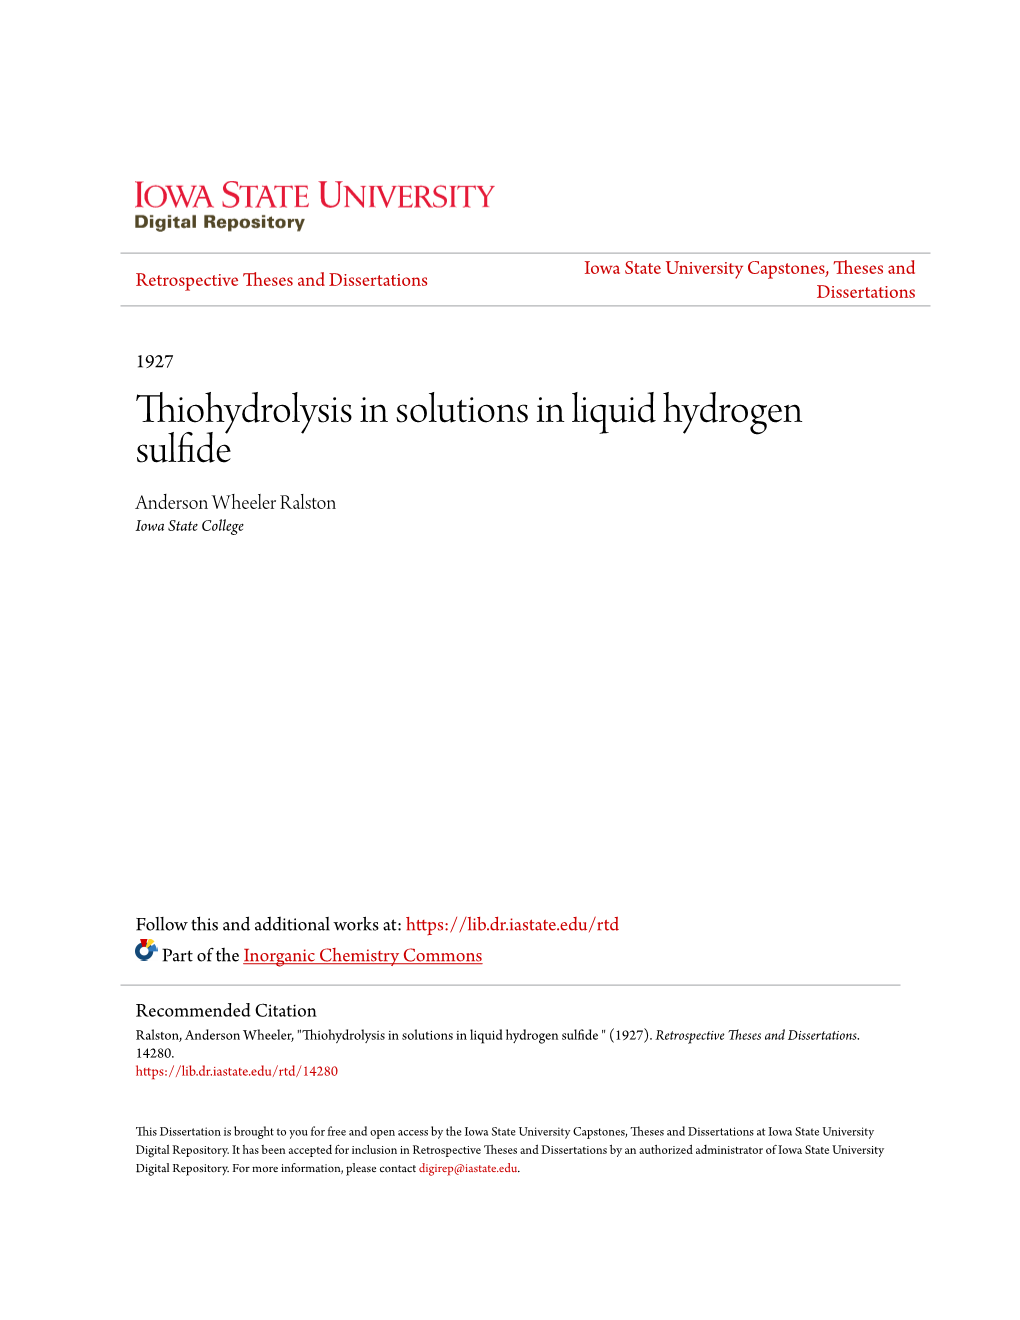 Thiohydrolysis in Solutions in Liquid Hydrogen Sulfide Anderson Wheeler Ralston Iowa State College